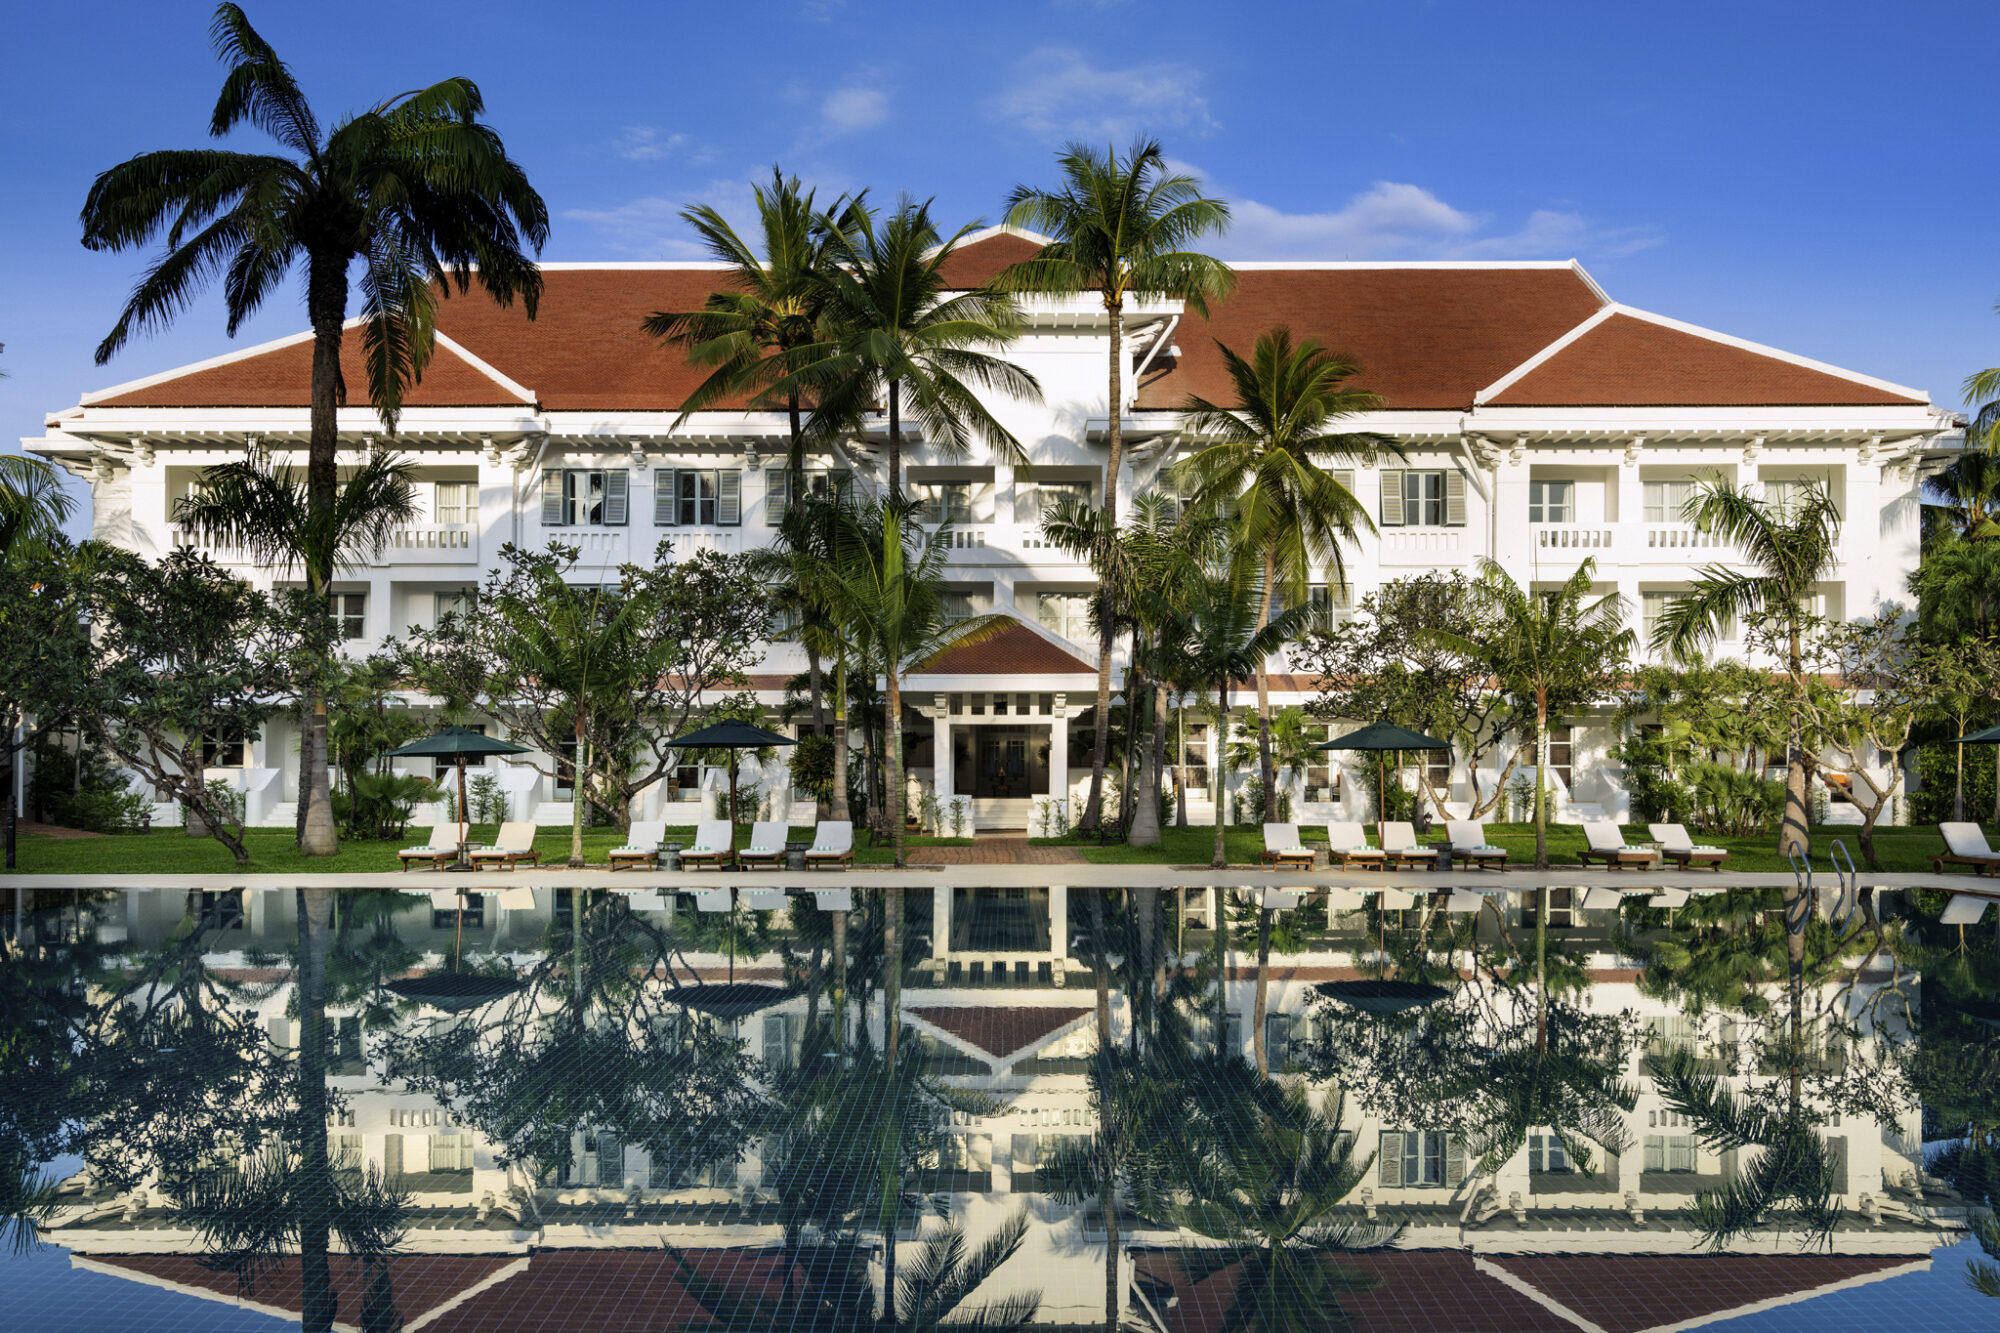 Raffles-Hotel-dAngkor-2.jpg